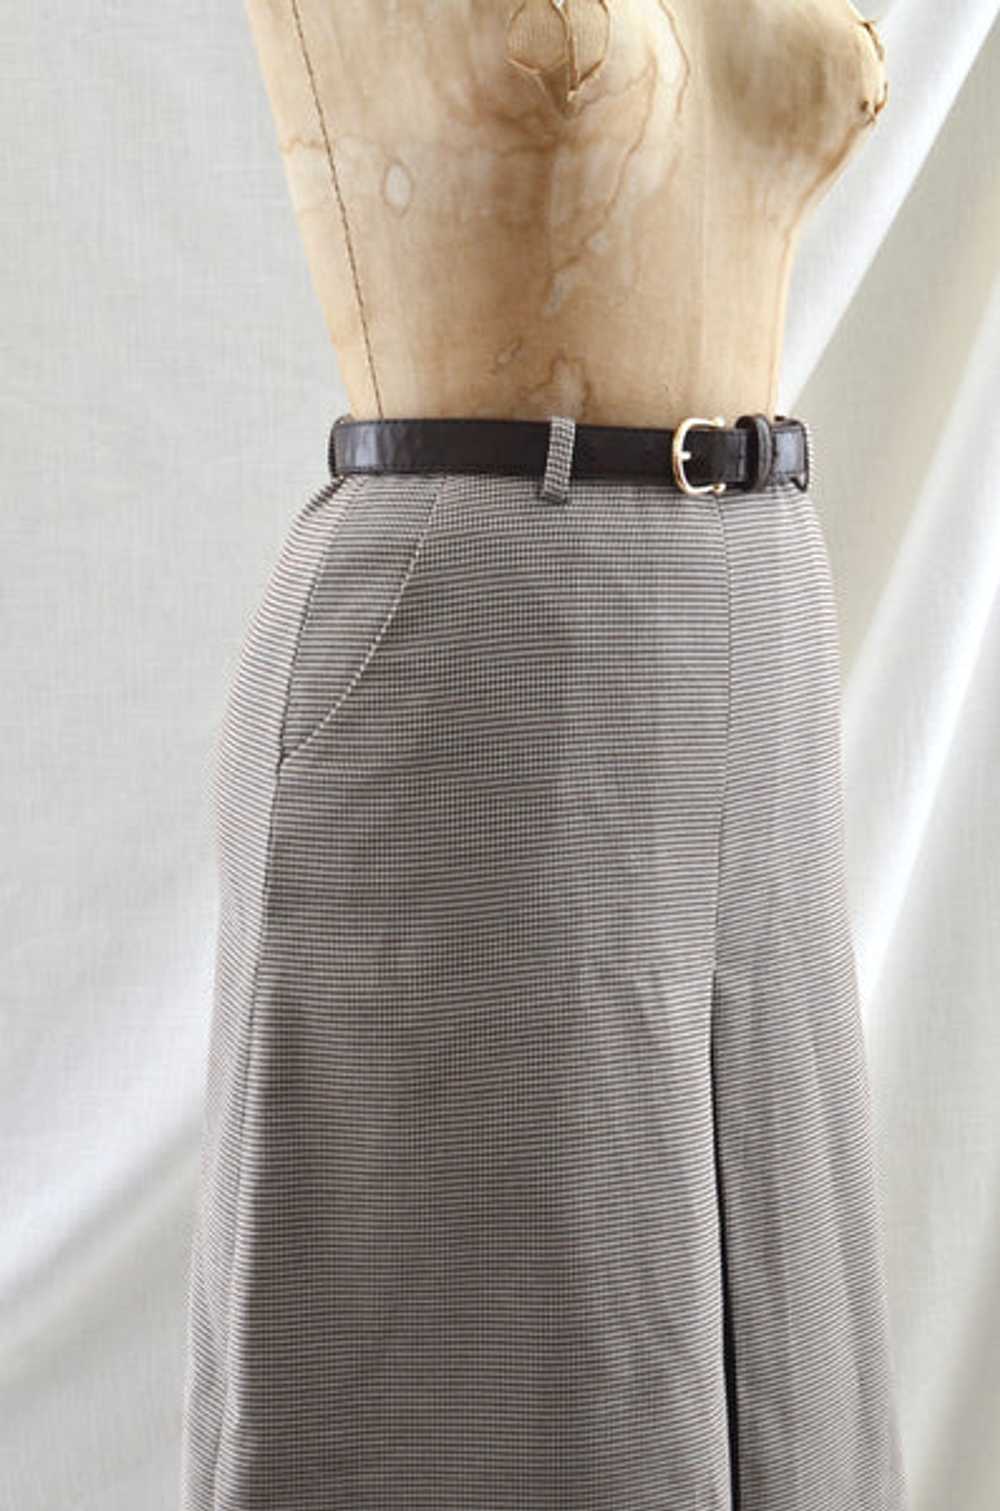 Vintage Pencil Skirt - image 2